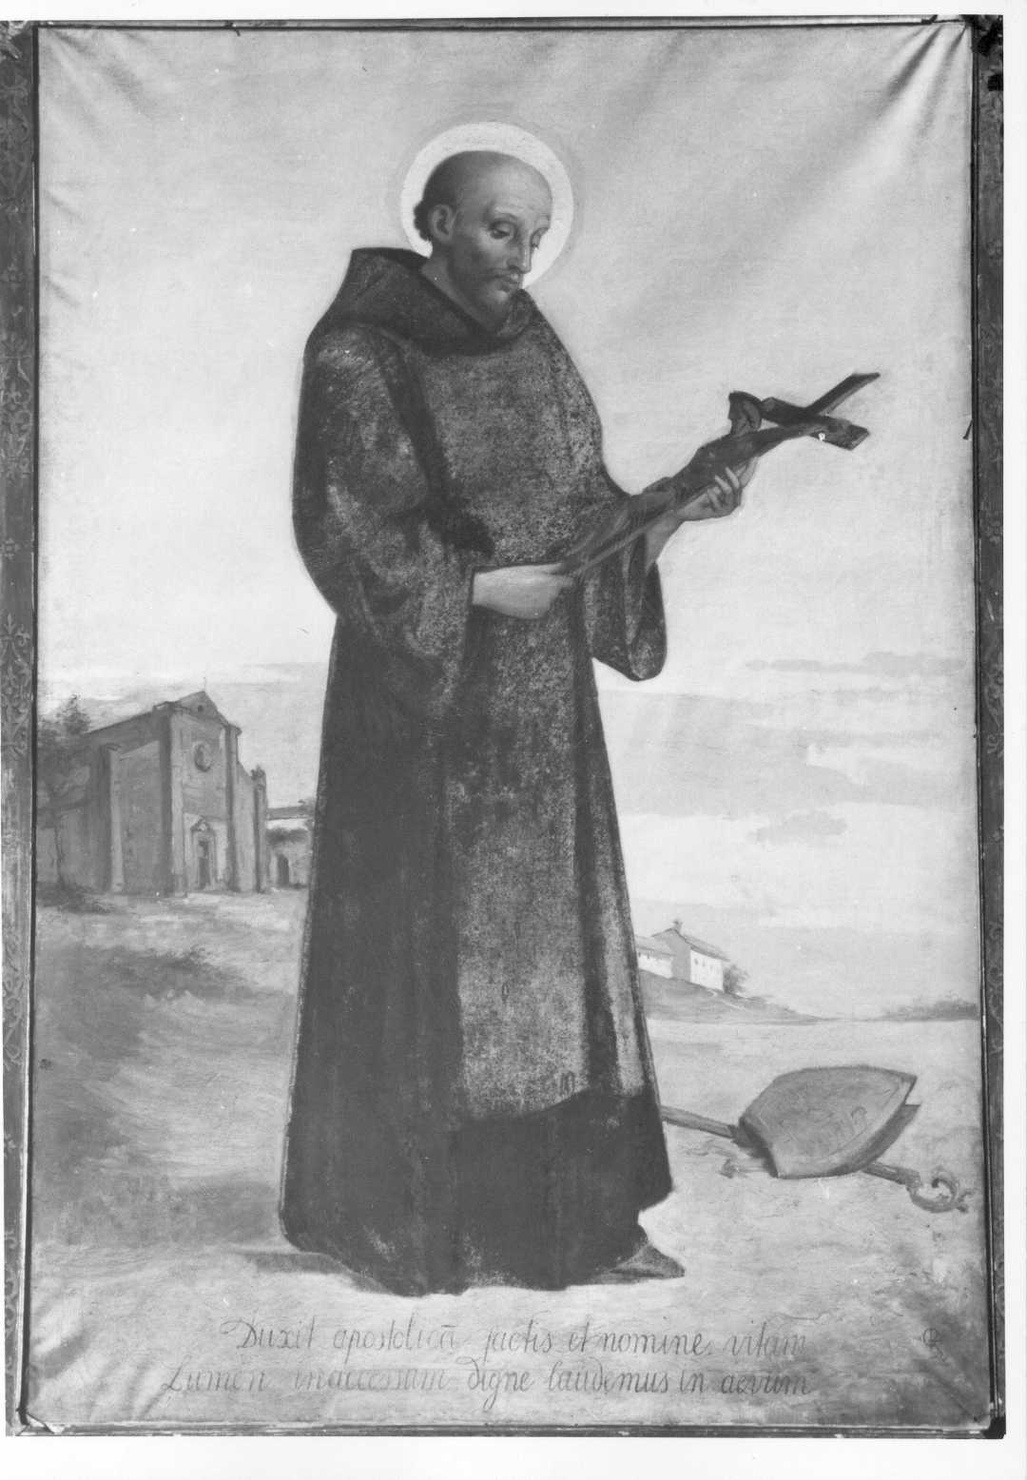 San Maiolo (dipinto) di Radlinski Gaetana (attribuito) (inizio sec. XX)